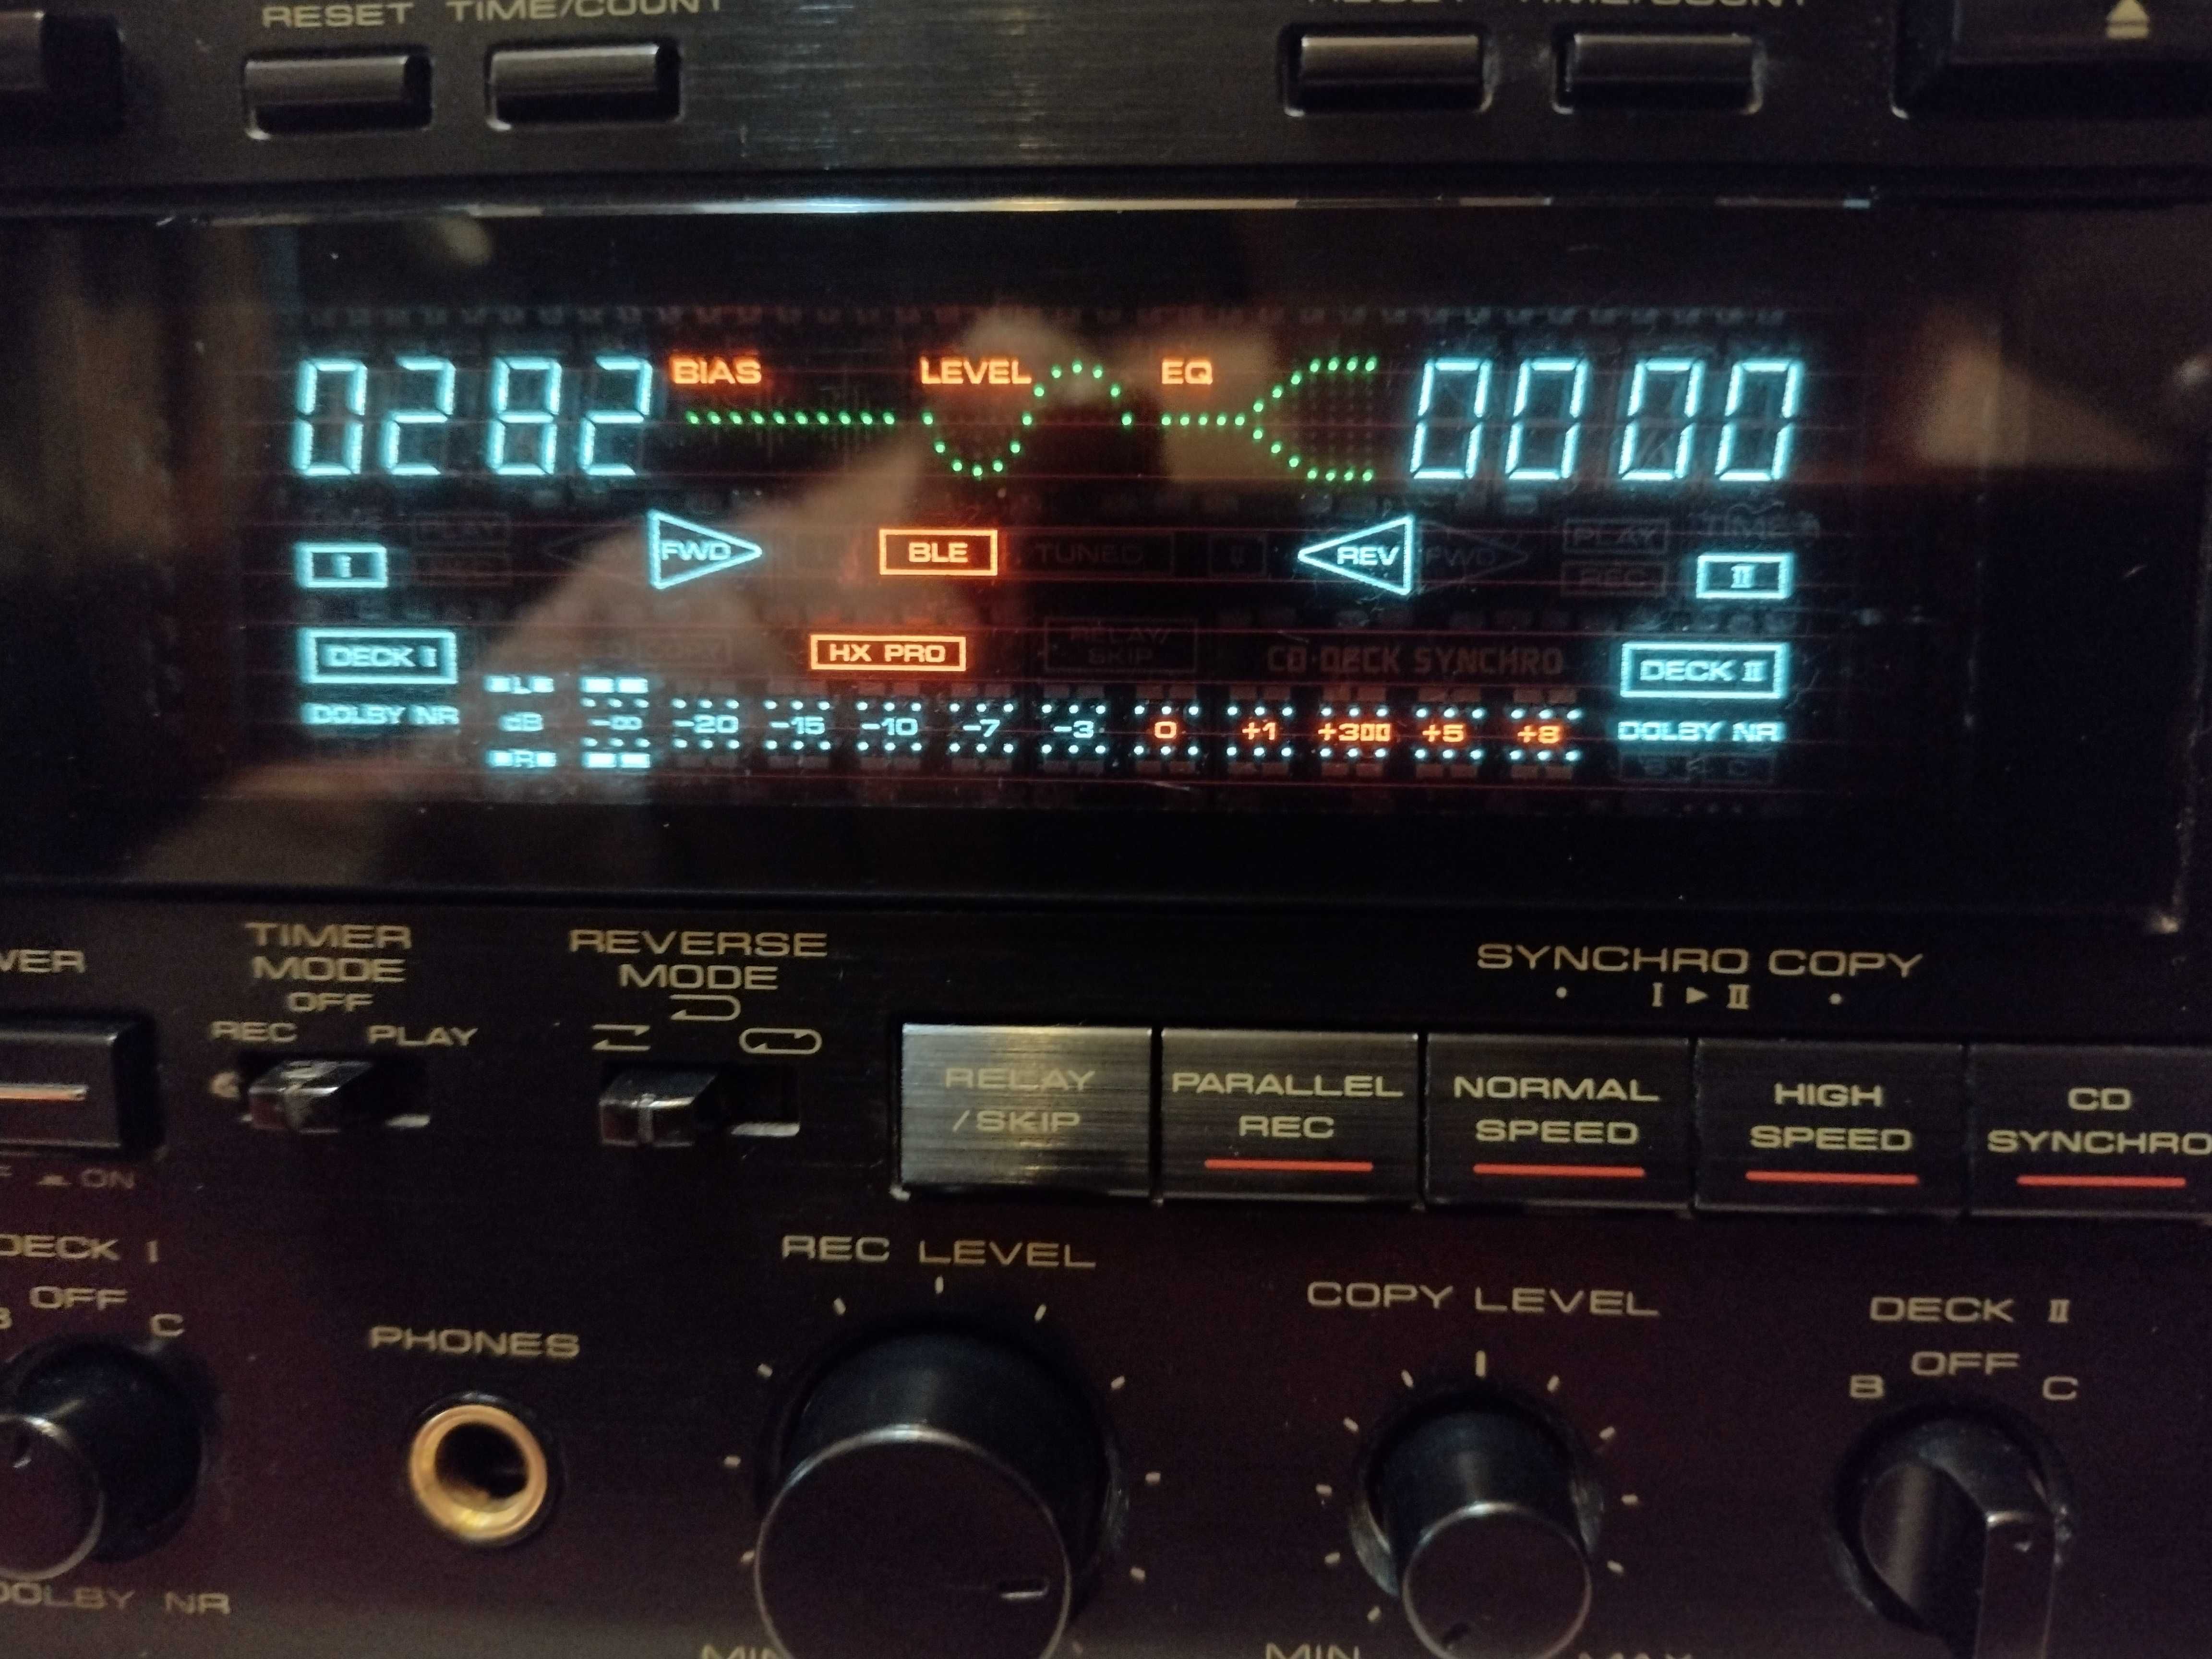 Pioneer CT-W950R Double Cassette Deck